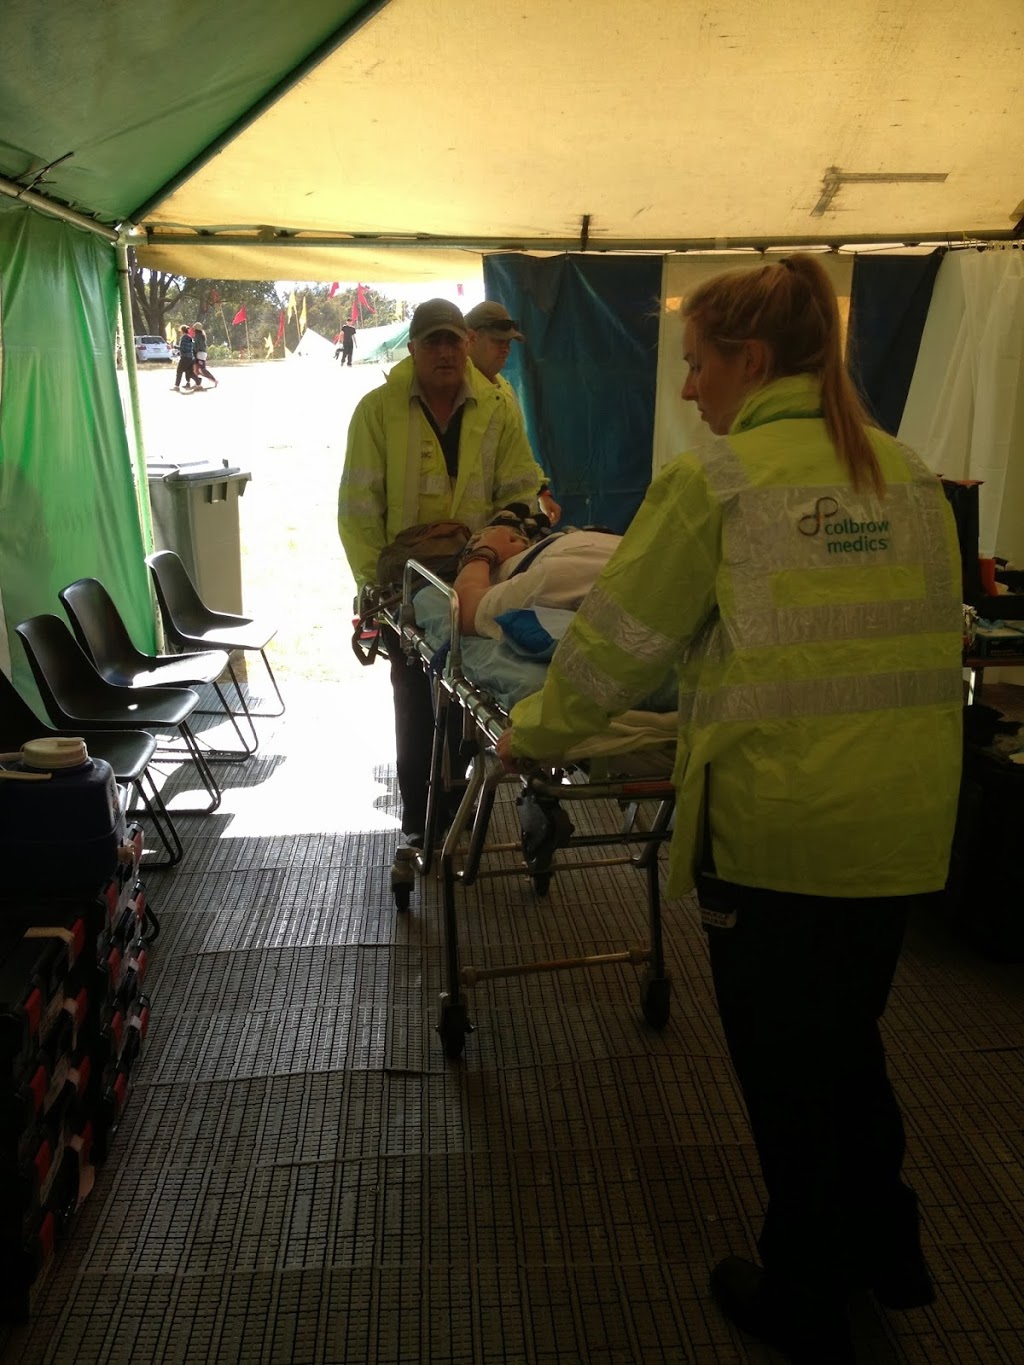 Colbrow Medics (inc. First Aid @ Events) | Unit 10/556 – 598 Princes Hwy, Noble Park North VIC 3174, Australia | Phone: 1300 550 123